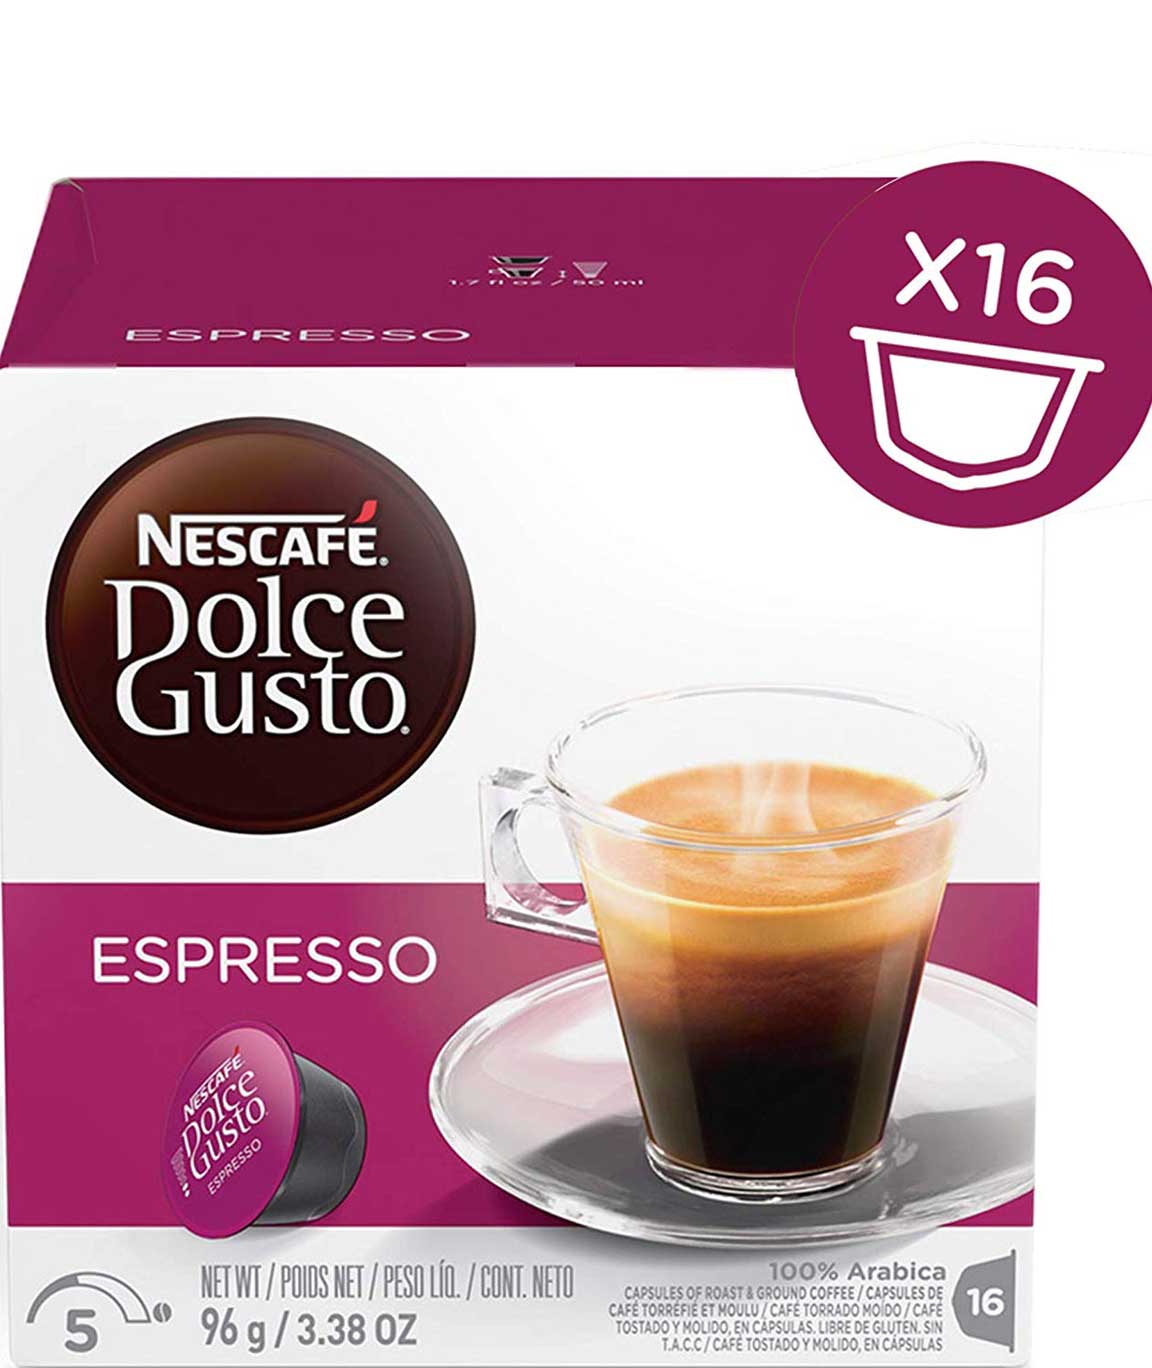 Nescafe Dolce Gusto Espresso Coffee Capsules (Pack of 48